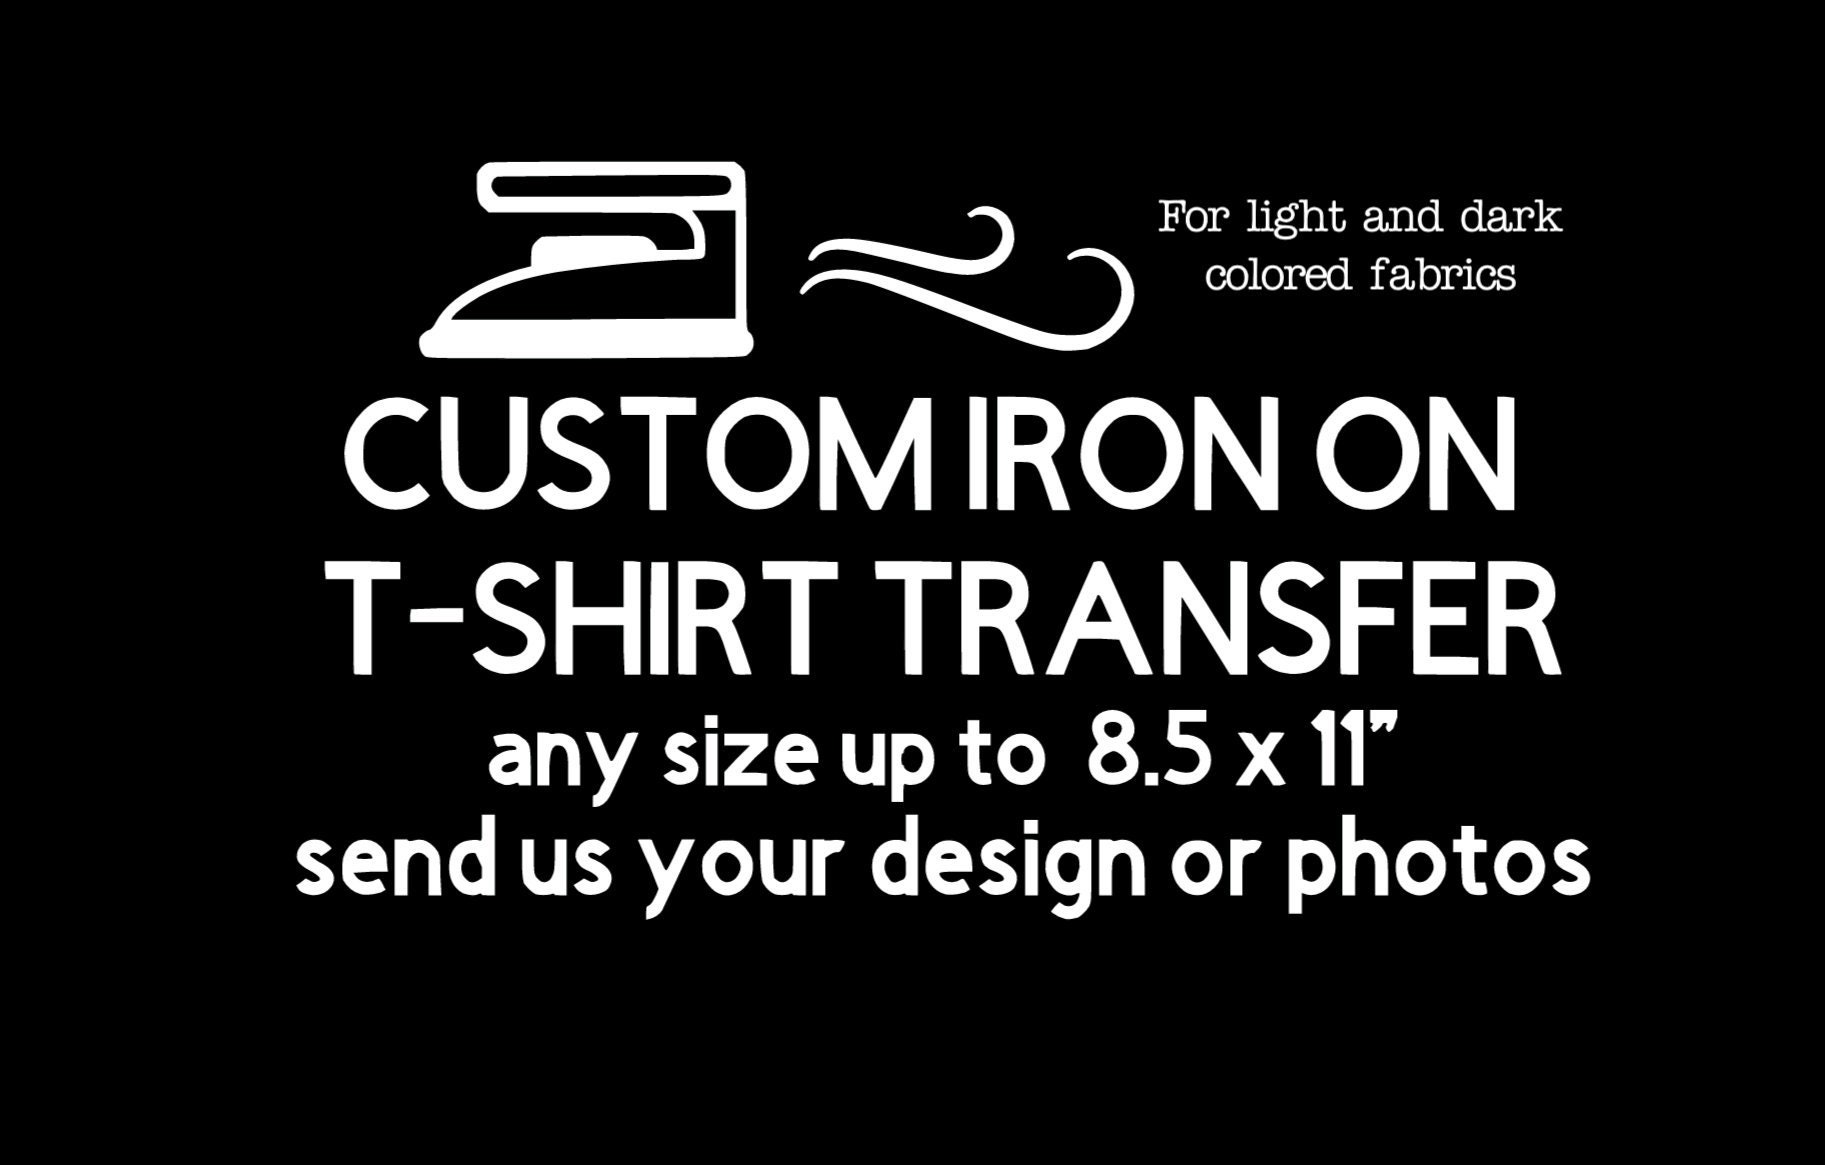 Inkjet Printable Heat Transfer Paper DARK LIGHT T-shirt Iron-on